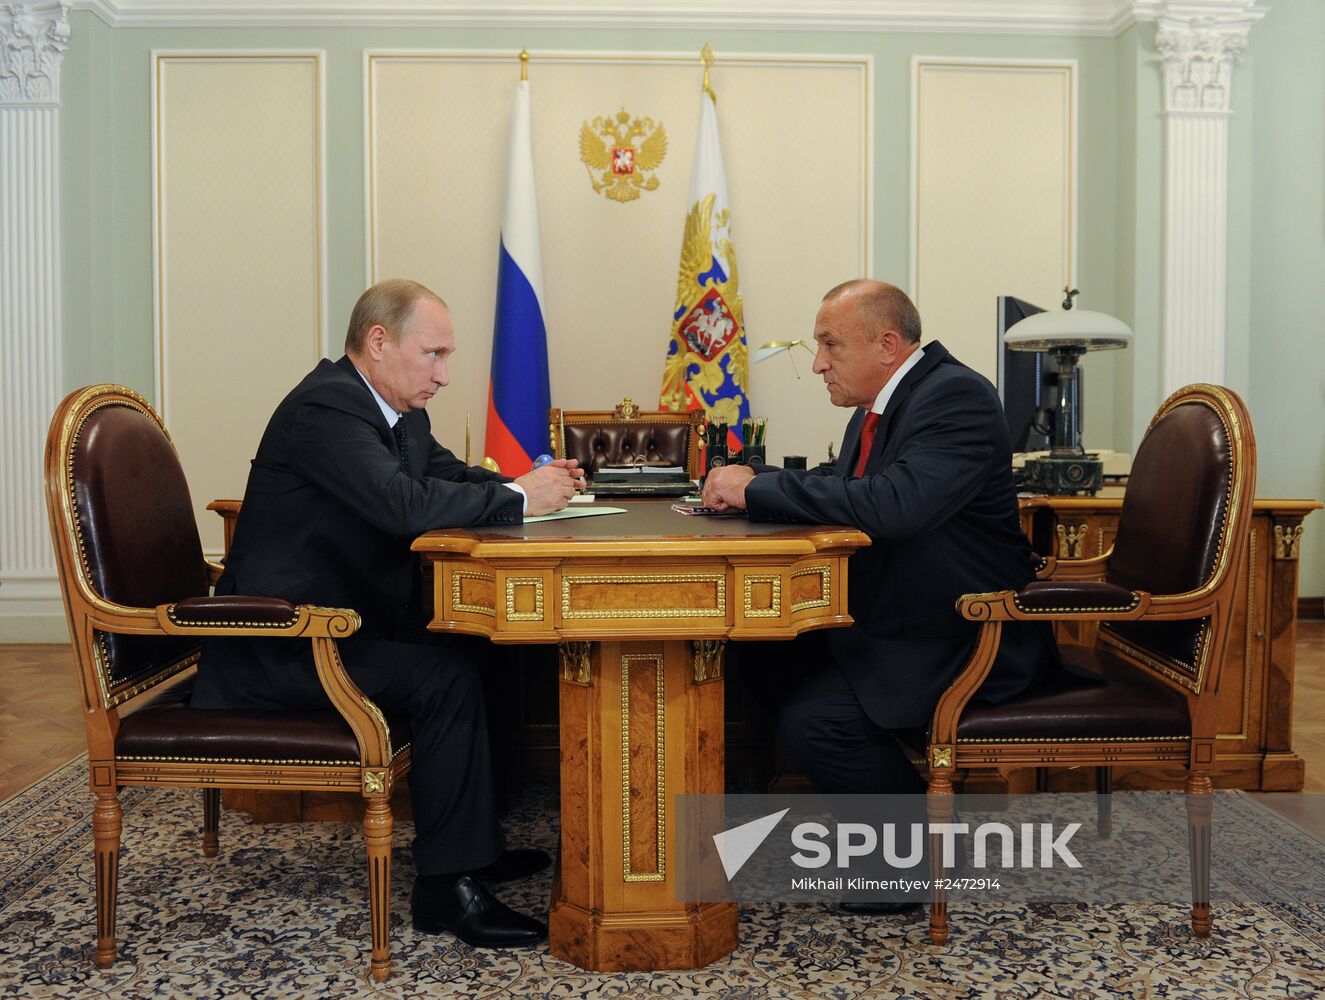 Vladimir Putin meets with Alexander Solovyov